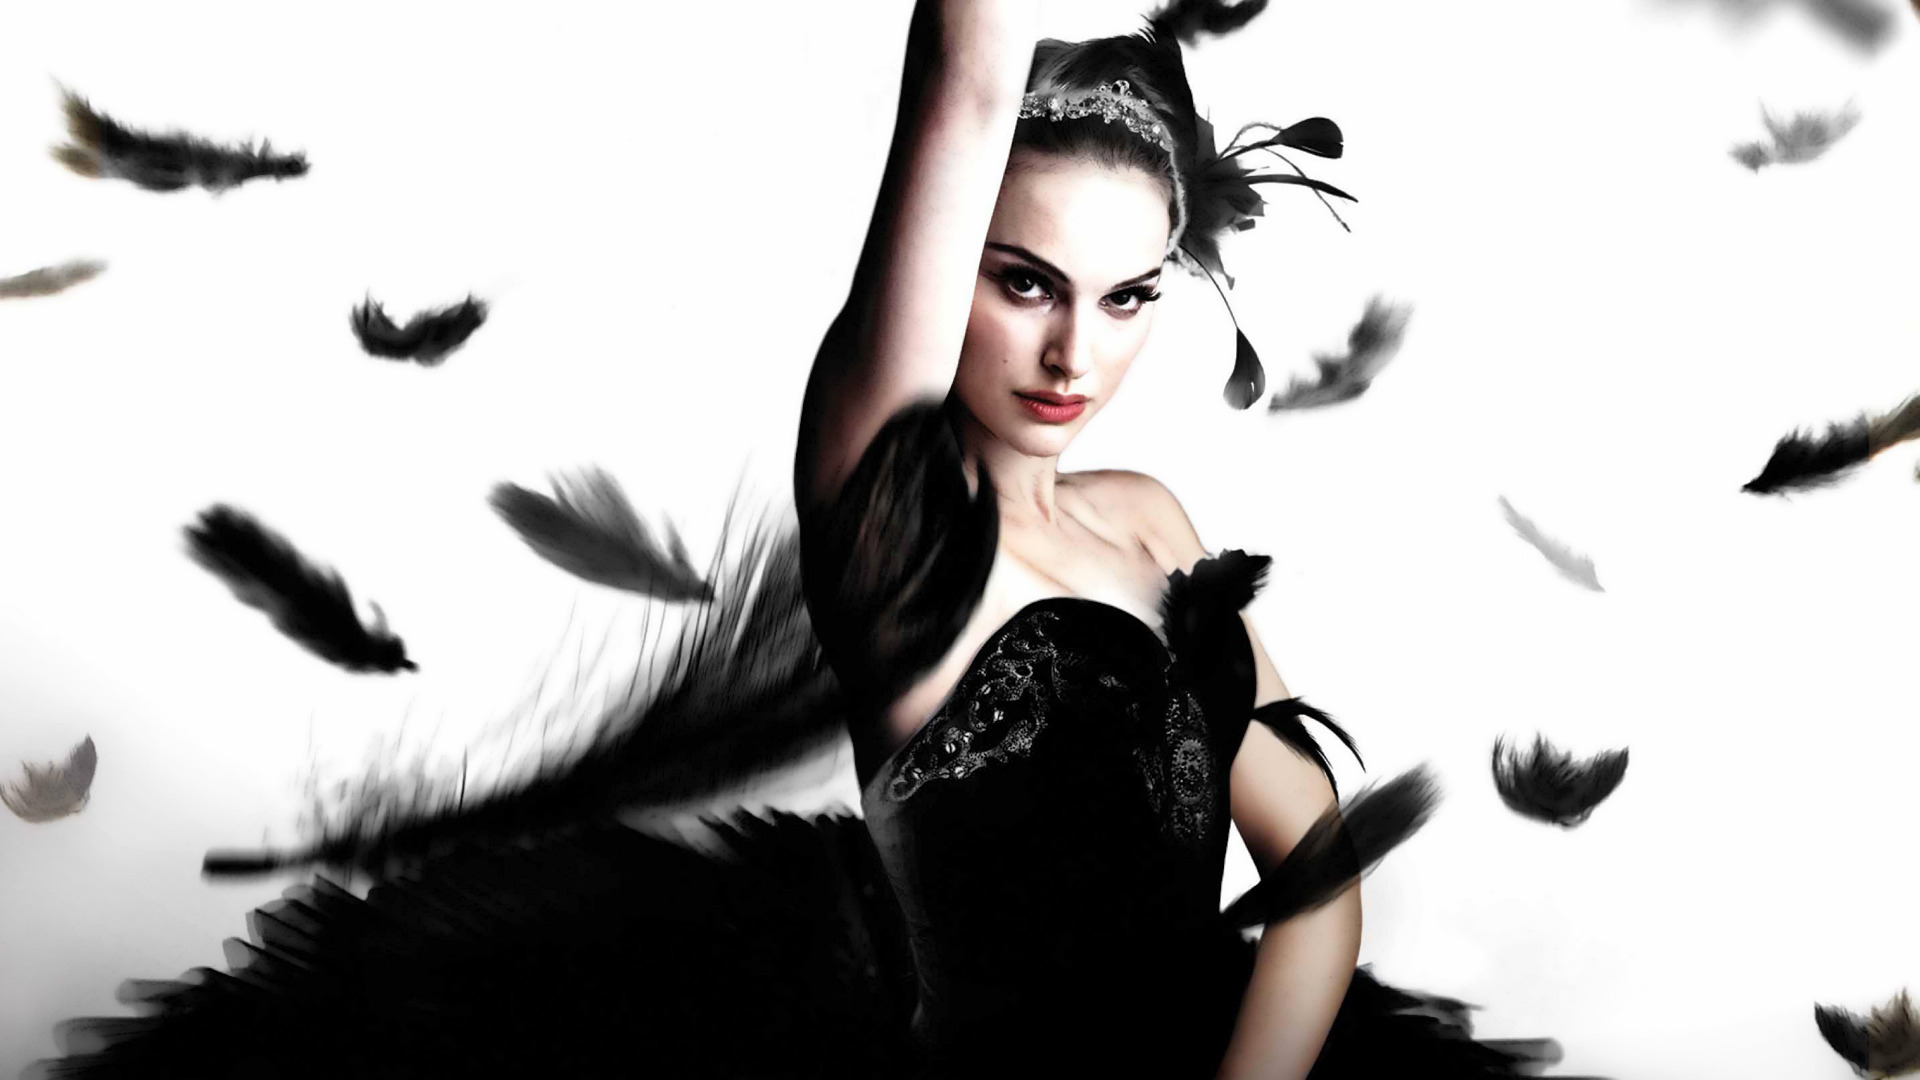 BLACK SWAN by Darren Aronofsky starring Natalie Portman